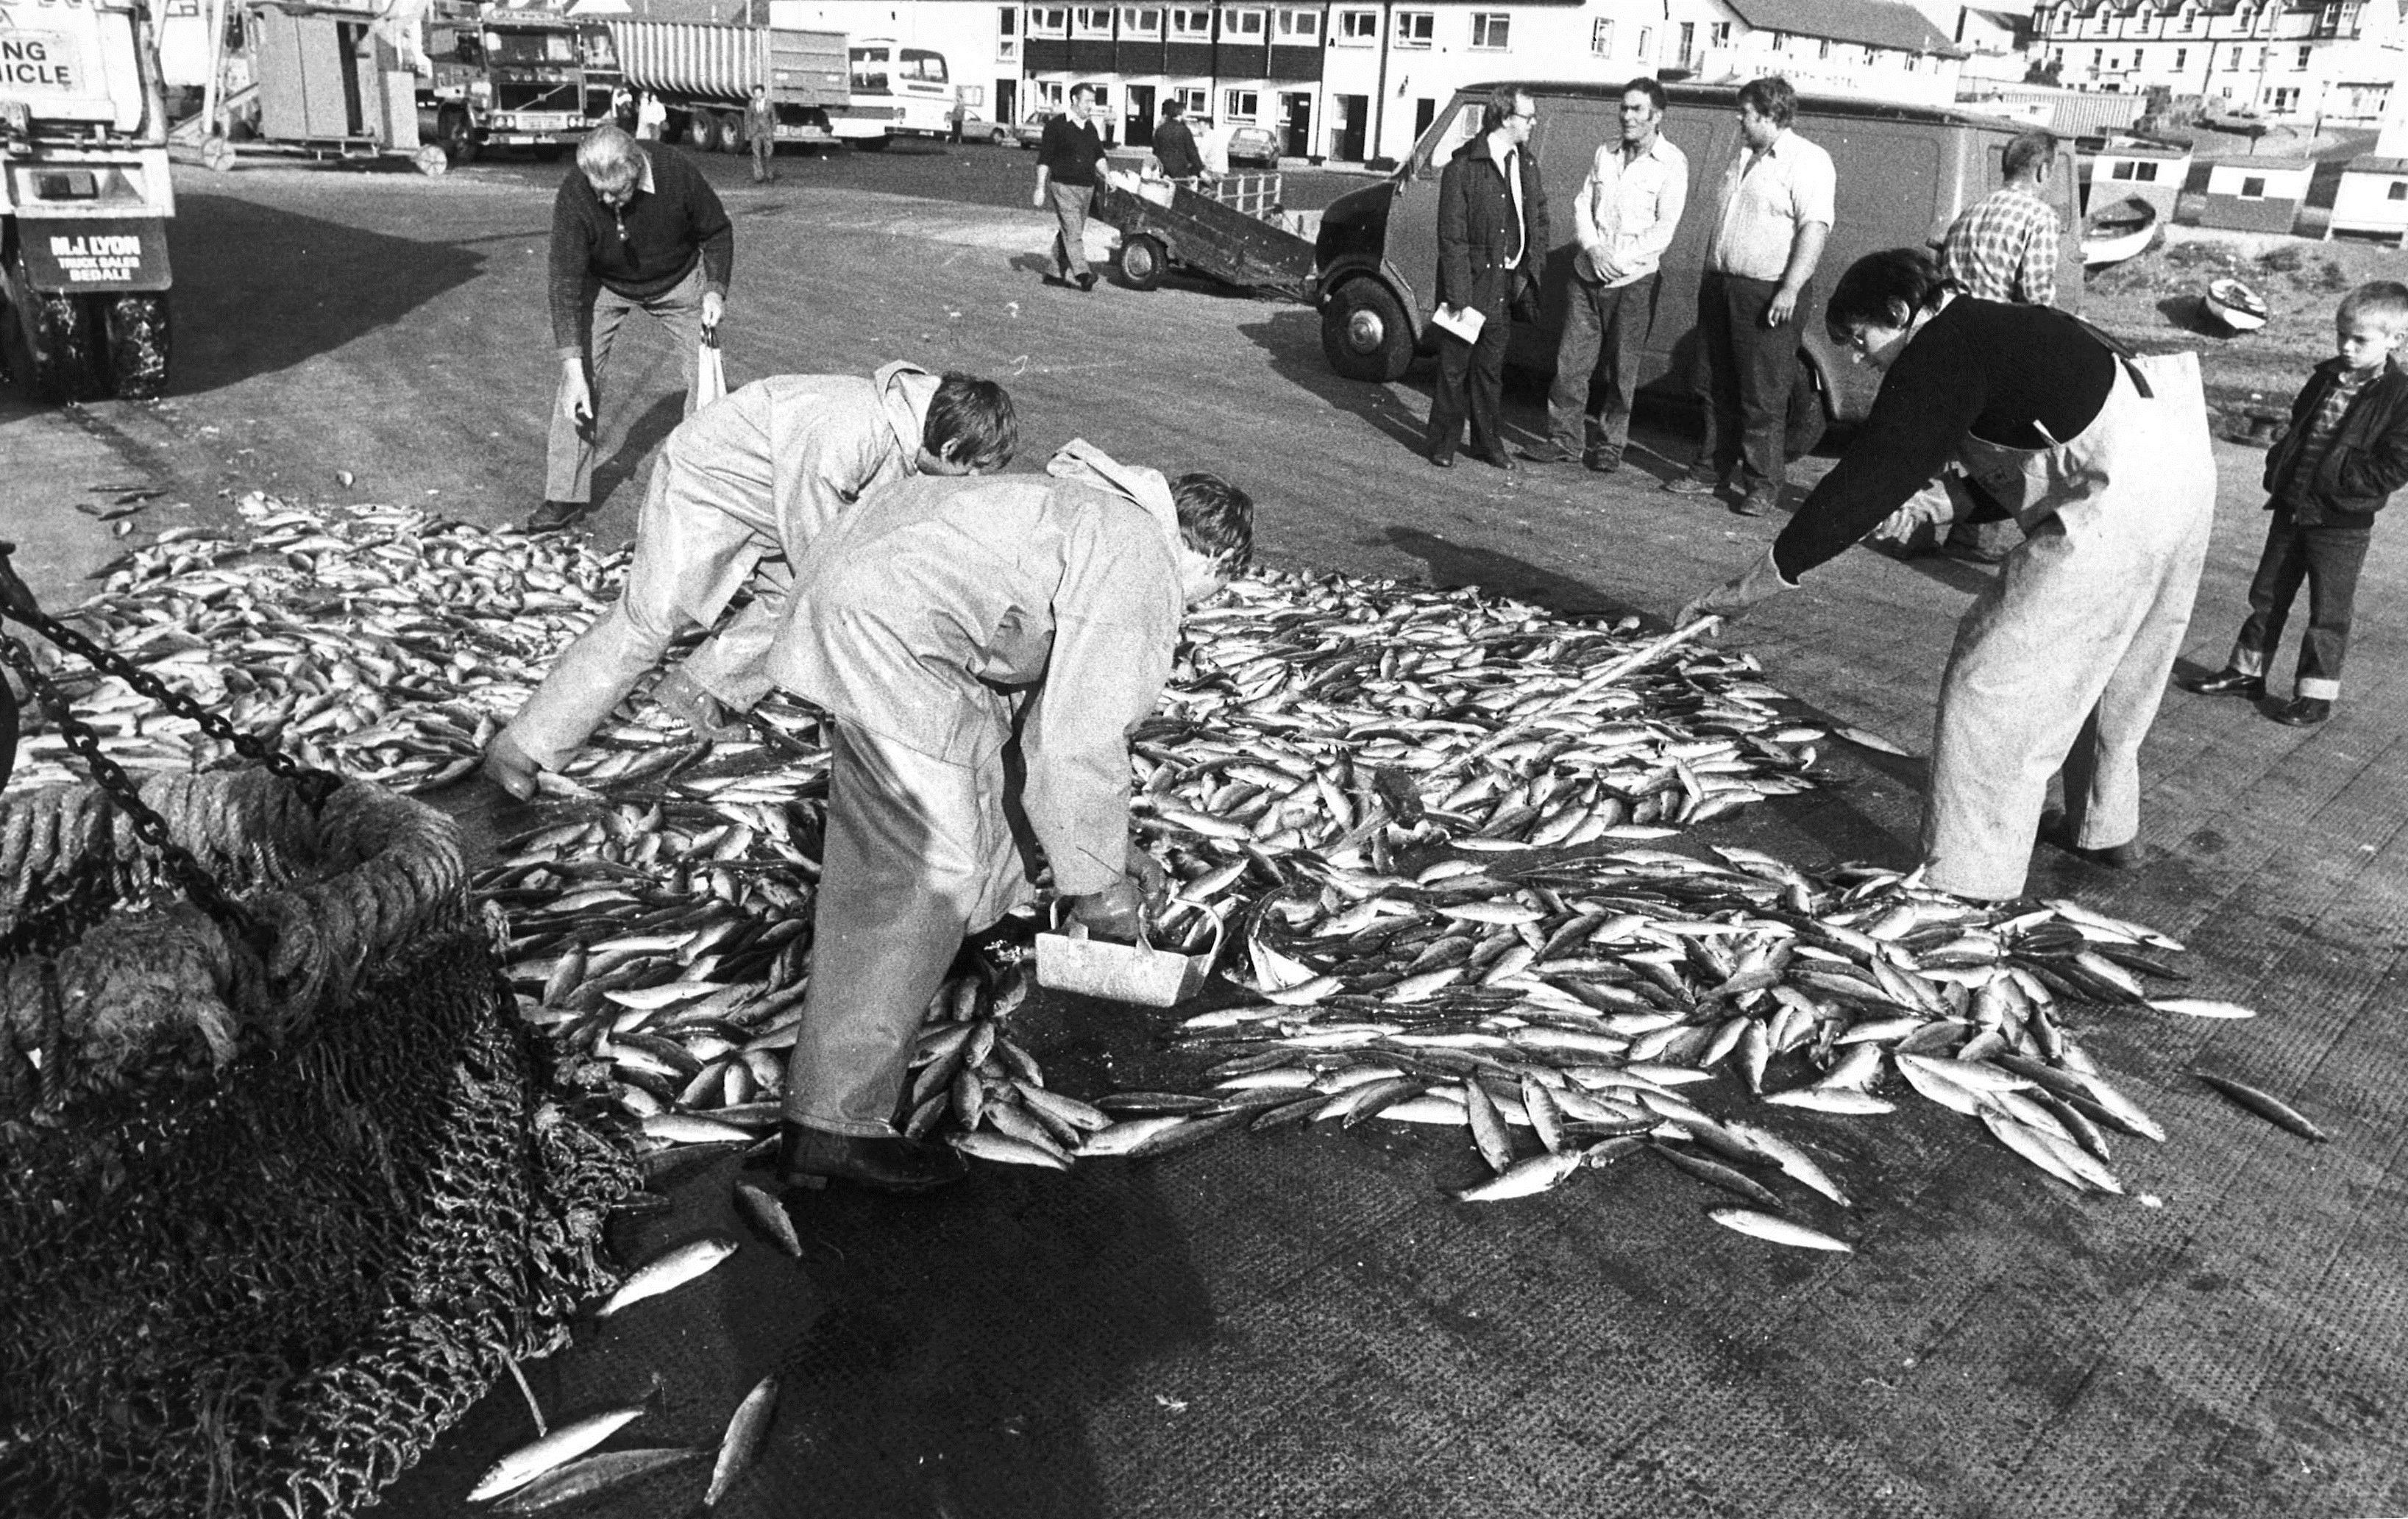 Fishermen picking up herring in Ullapool, 7 August 1981